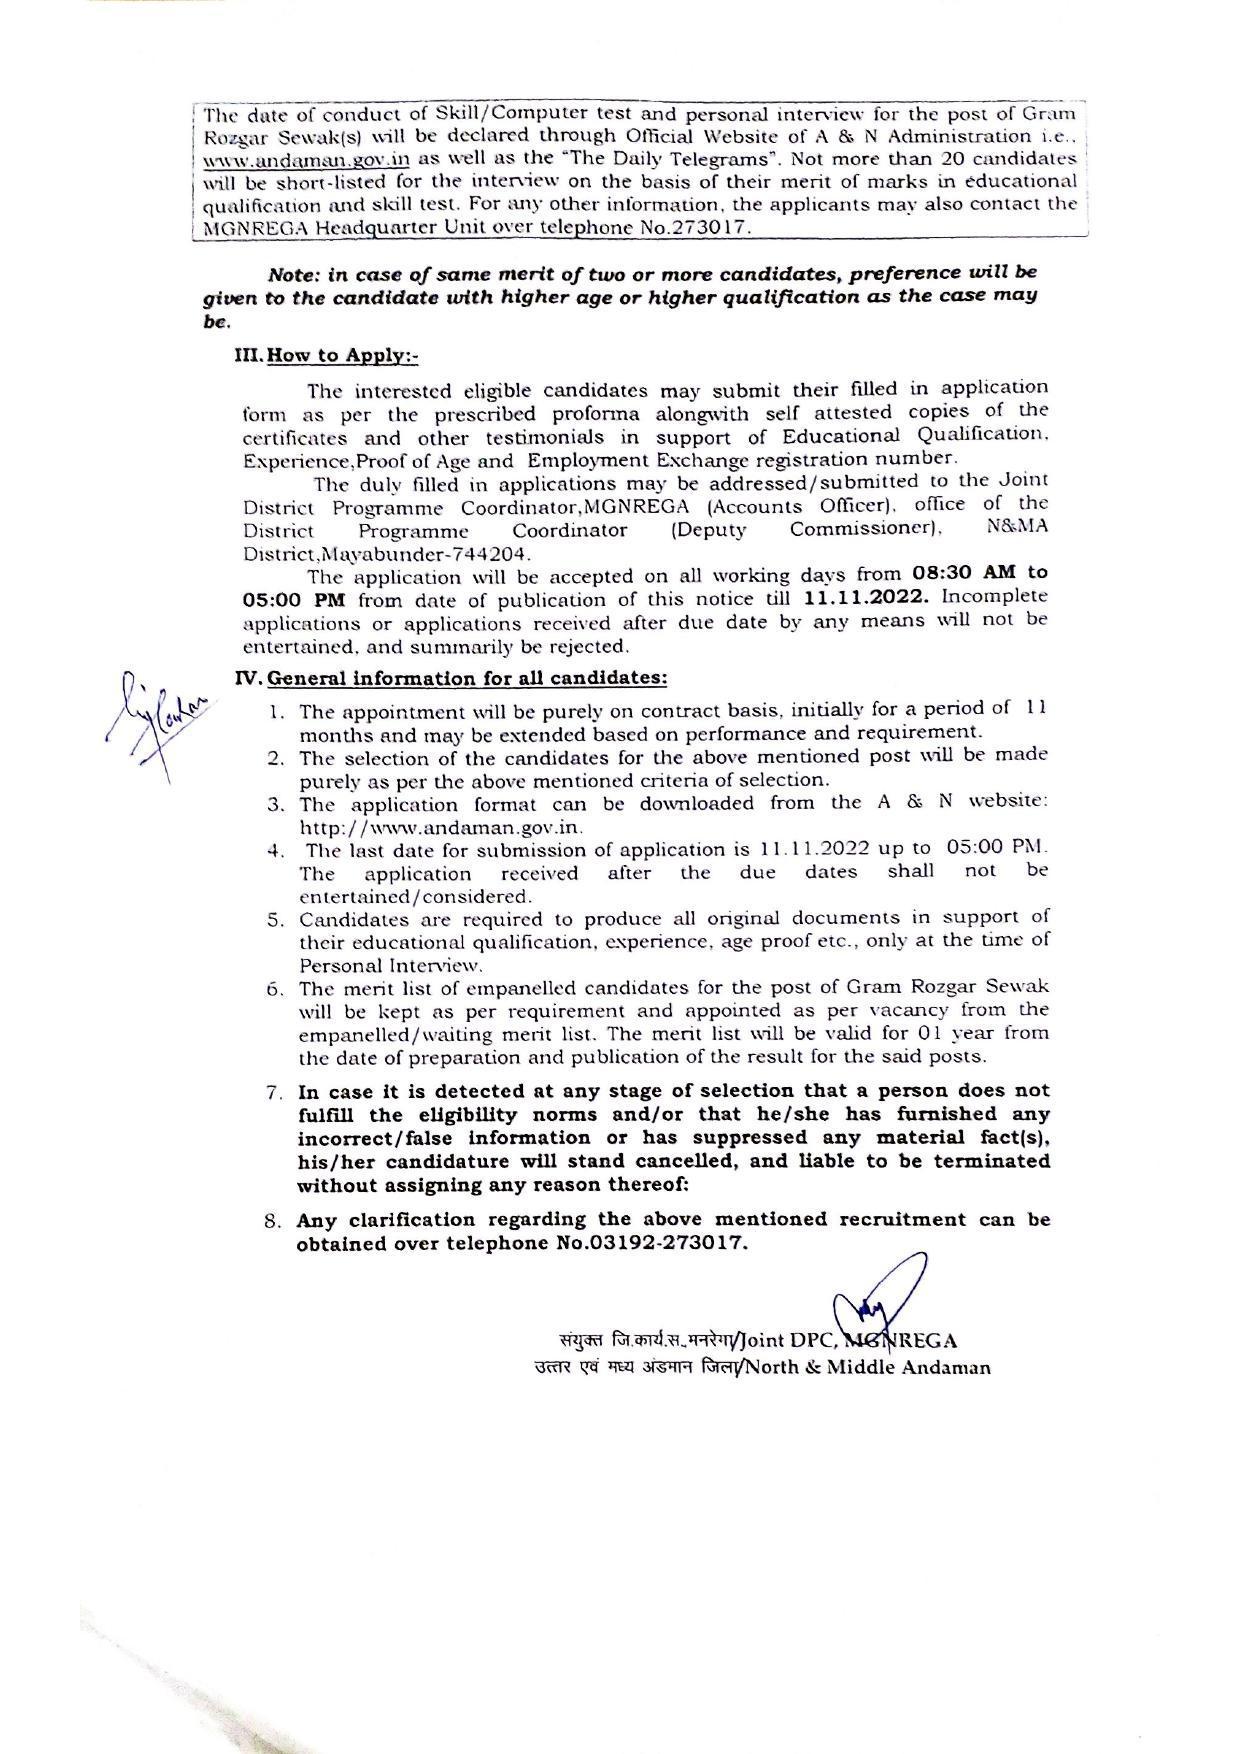 Andaman & Nicobar Administration Invites Application for Gram Rozgar Sewak Recruitment 2022 - Page 1